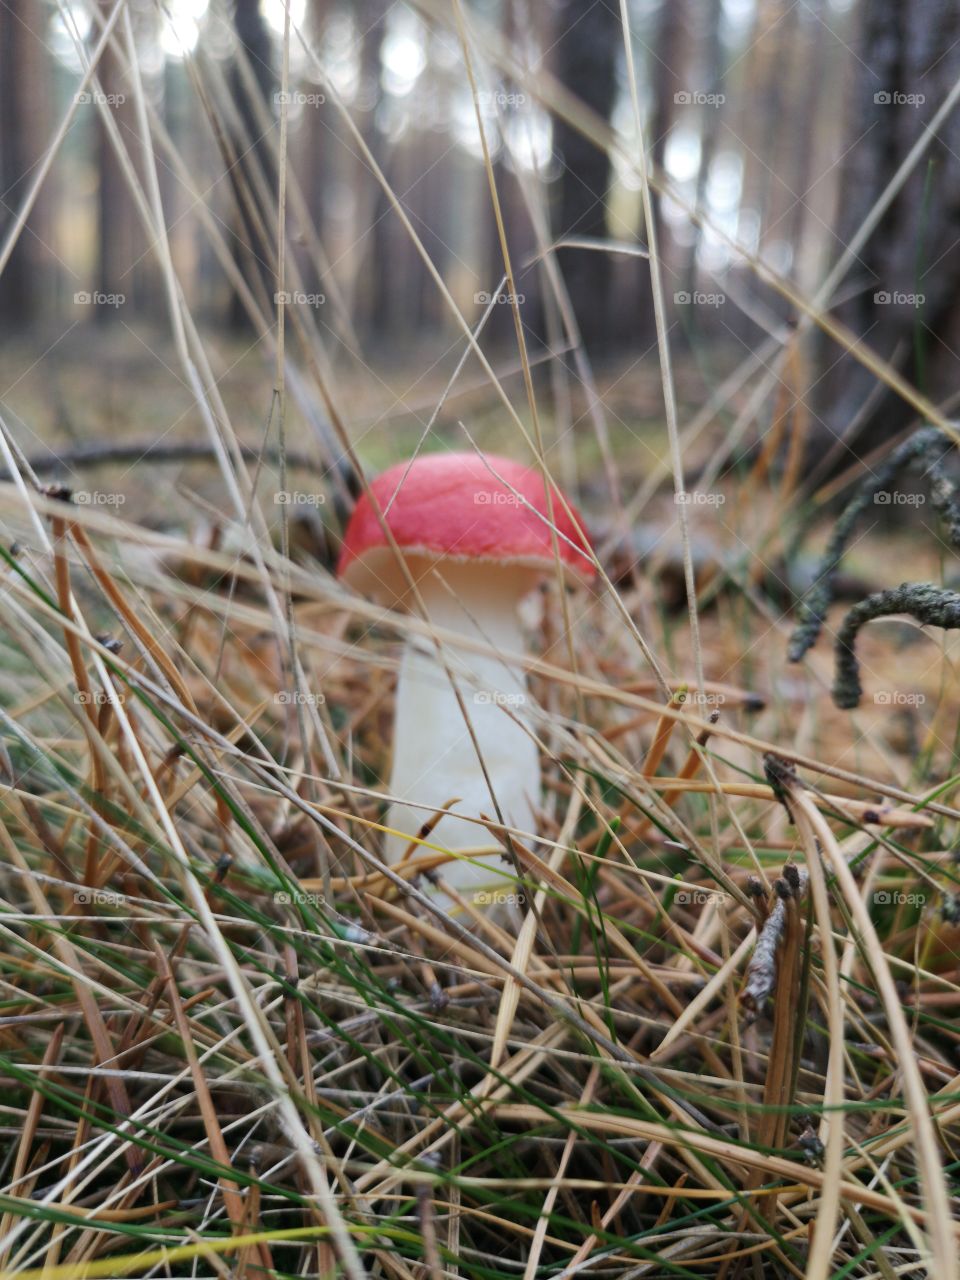 Mushroom in the autumn forest. Zielona Góra. Poland